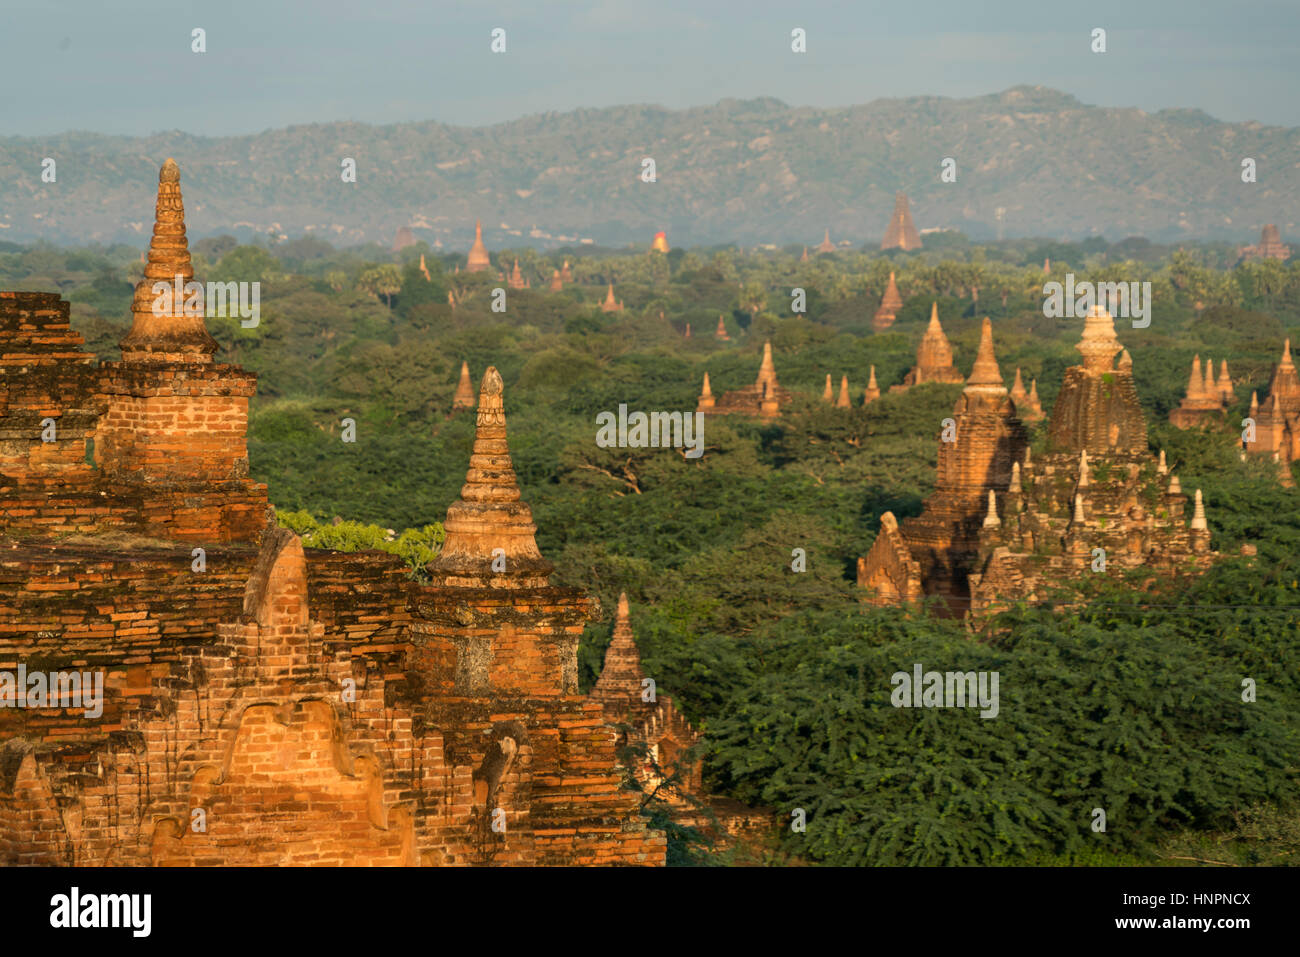 Tempel und Pagoden in der Ebene von Bagan, Myanmar, Asien  |  Bagan Plains temples and pagodas, Bagan, Myanmar, Asia Stock Photo